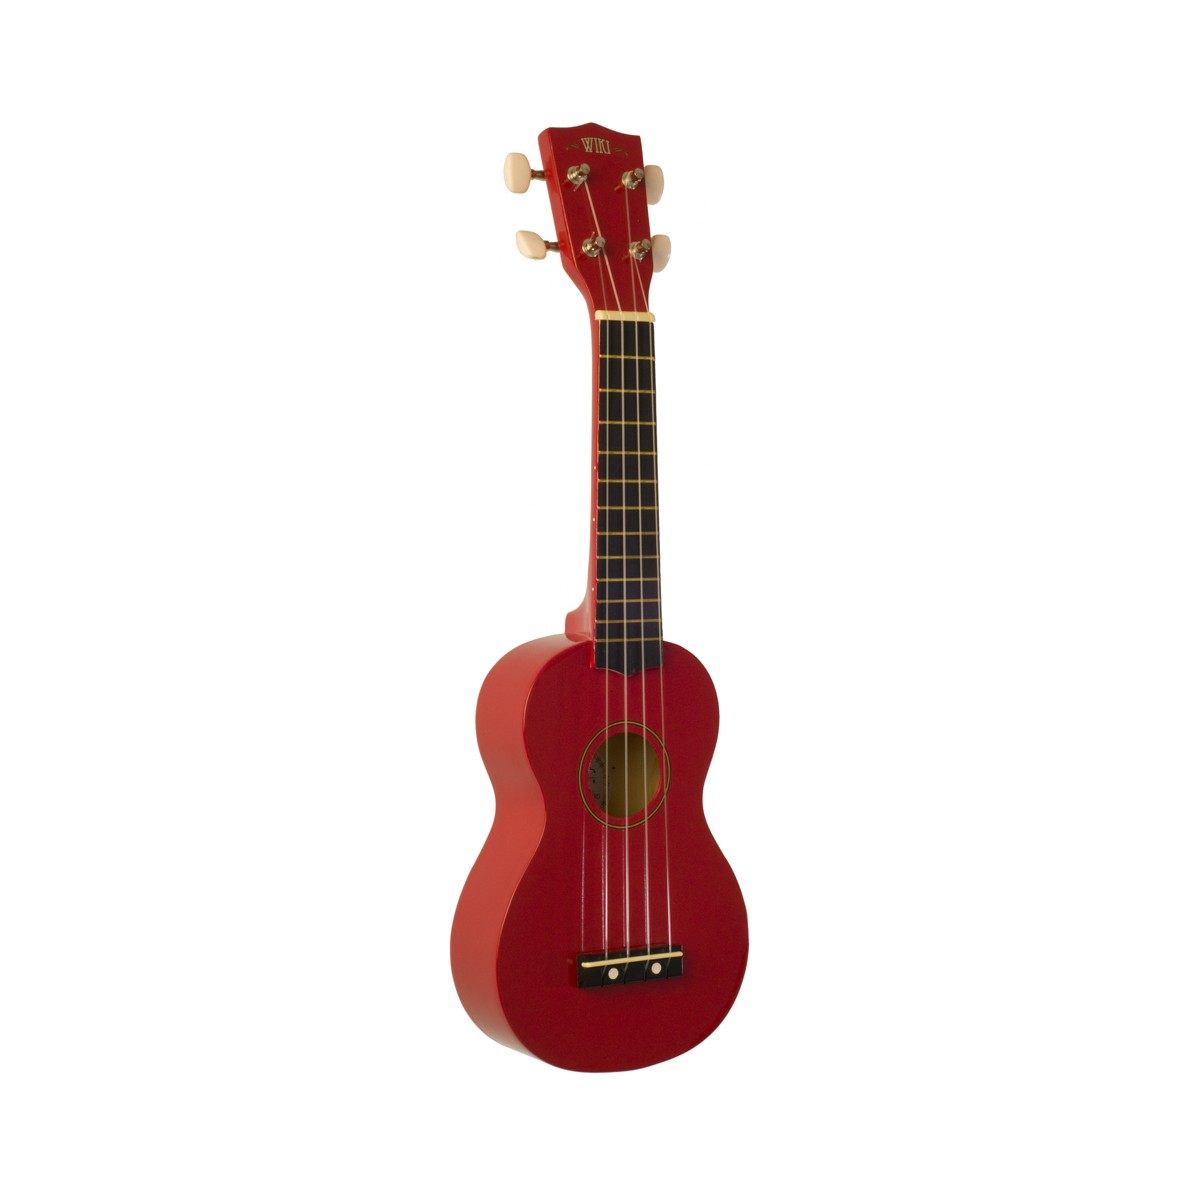 WIKI UK10G RD -  гитара укулеле сопрано, клен, цвет - красный глянец,чехол в комплекте